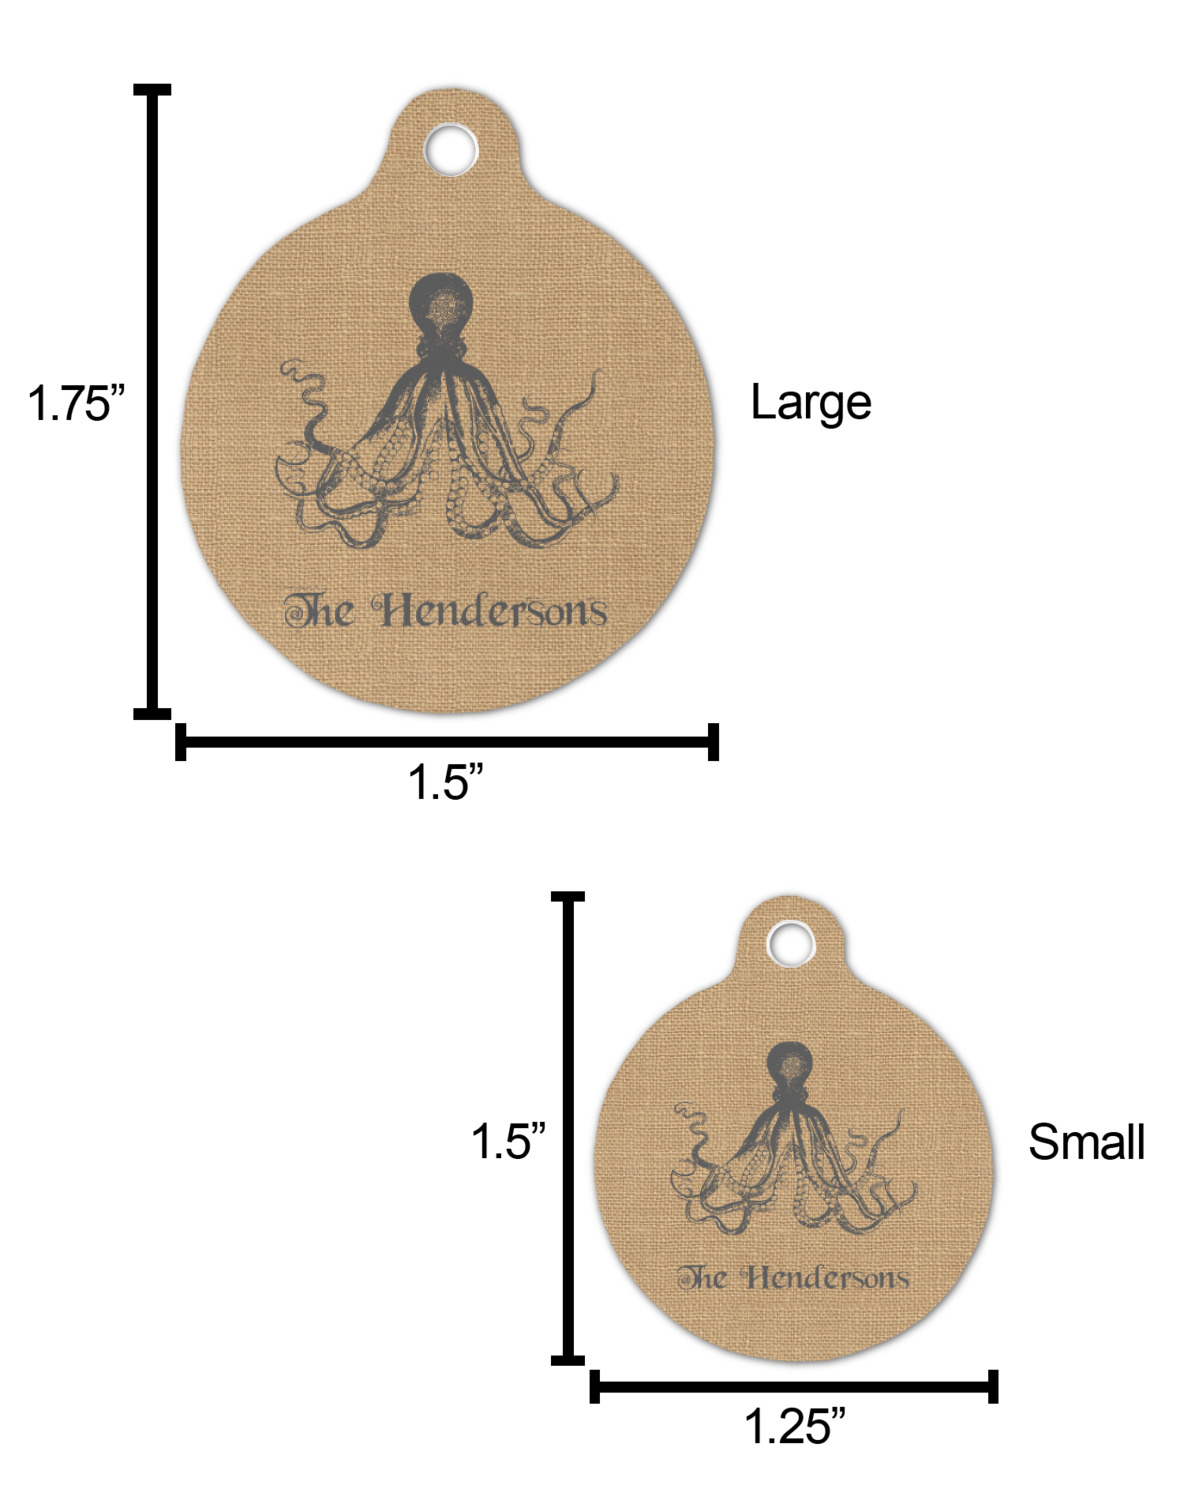 Custom Octopus & Burlap Print Bone Shaped Dog Food Mat (Personalized)